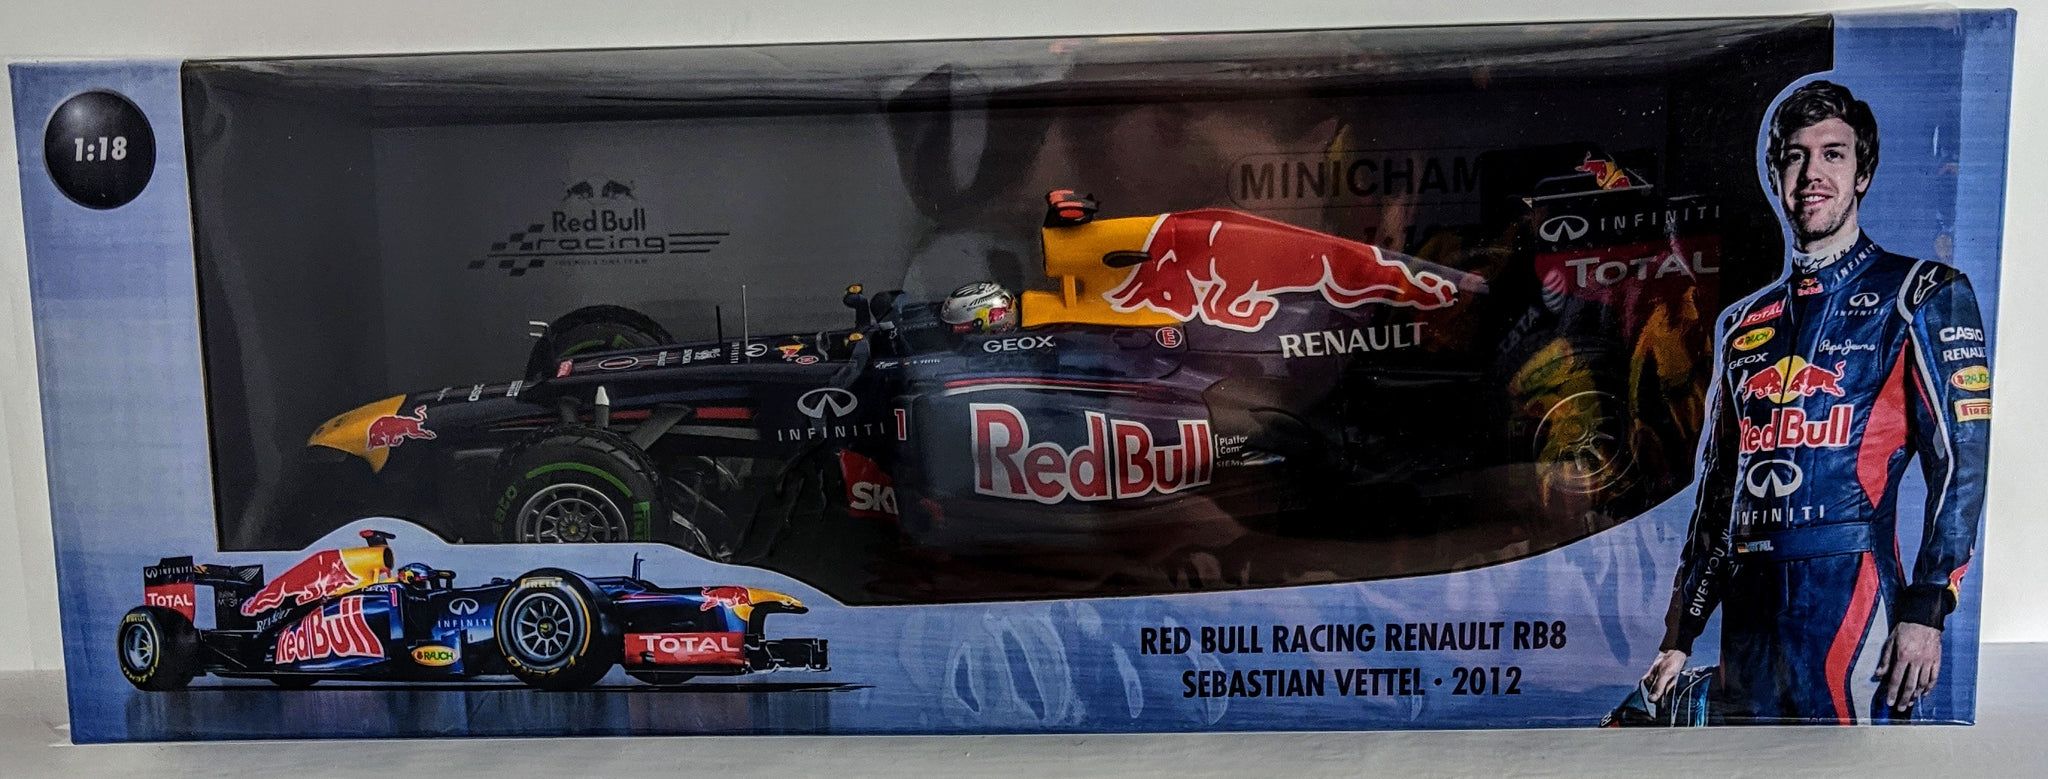 Minichamps 1:18 Scale Bull Racing Renault RB8 Sebastian Vettel GP 